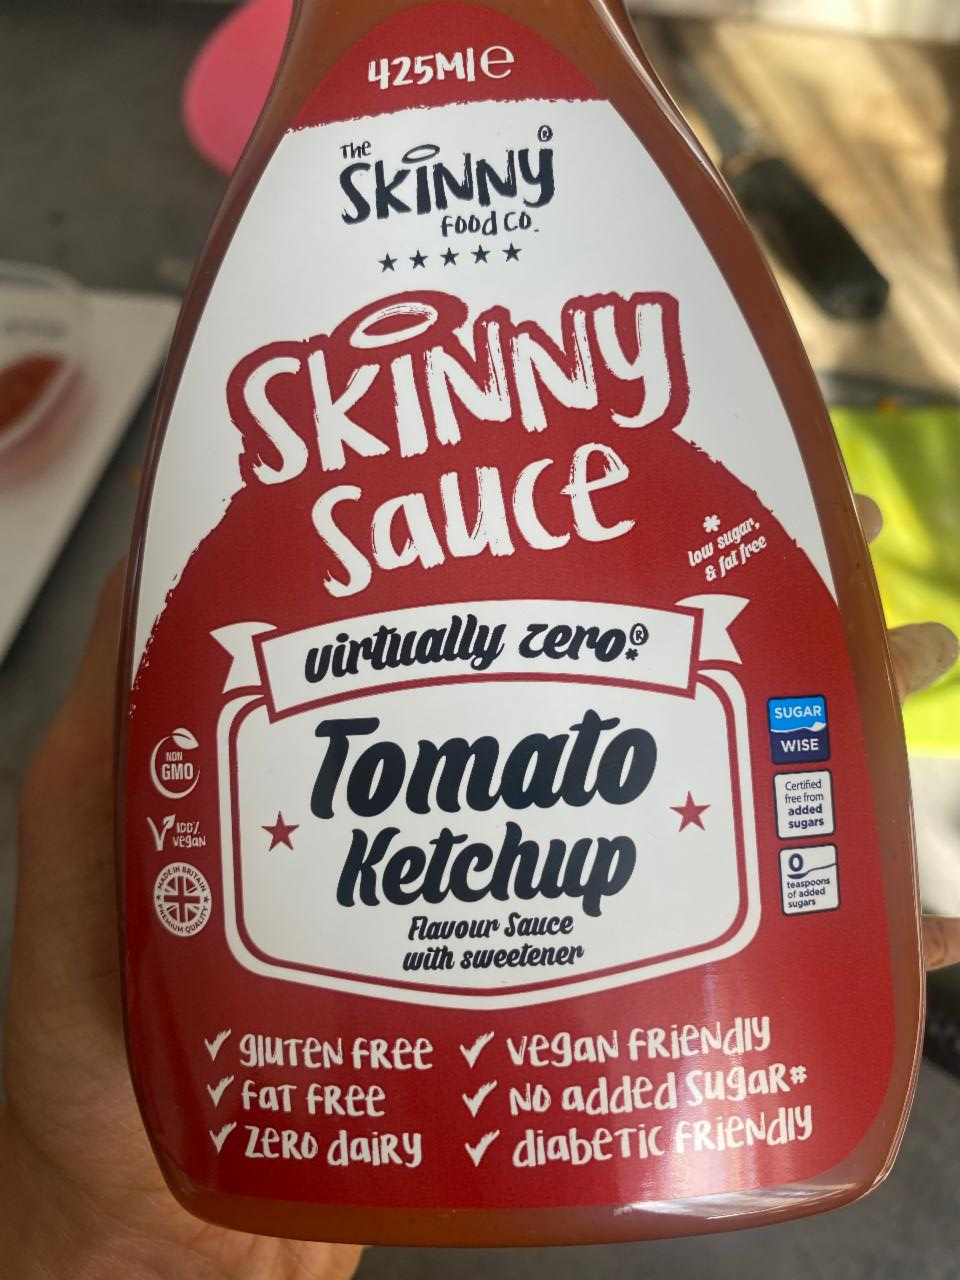 Fotografie - Skinny sauce tomato ketchup The Skinny Food Co